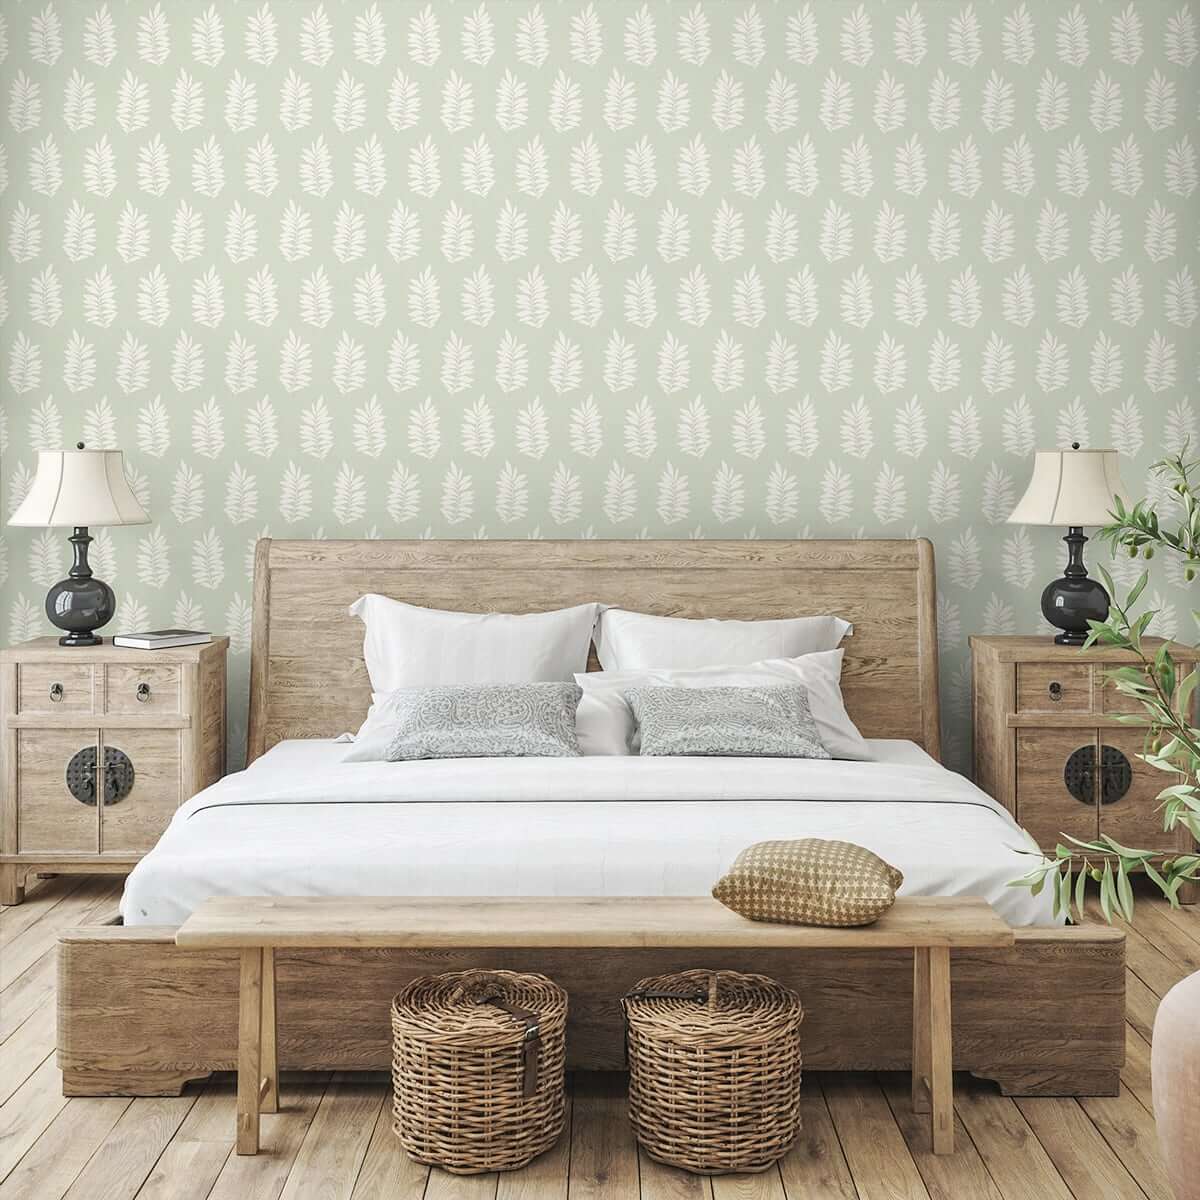 Seabrook Designs The Simple Life Pinnate Silhouette Wallpaper - Sage